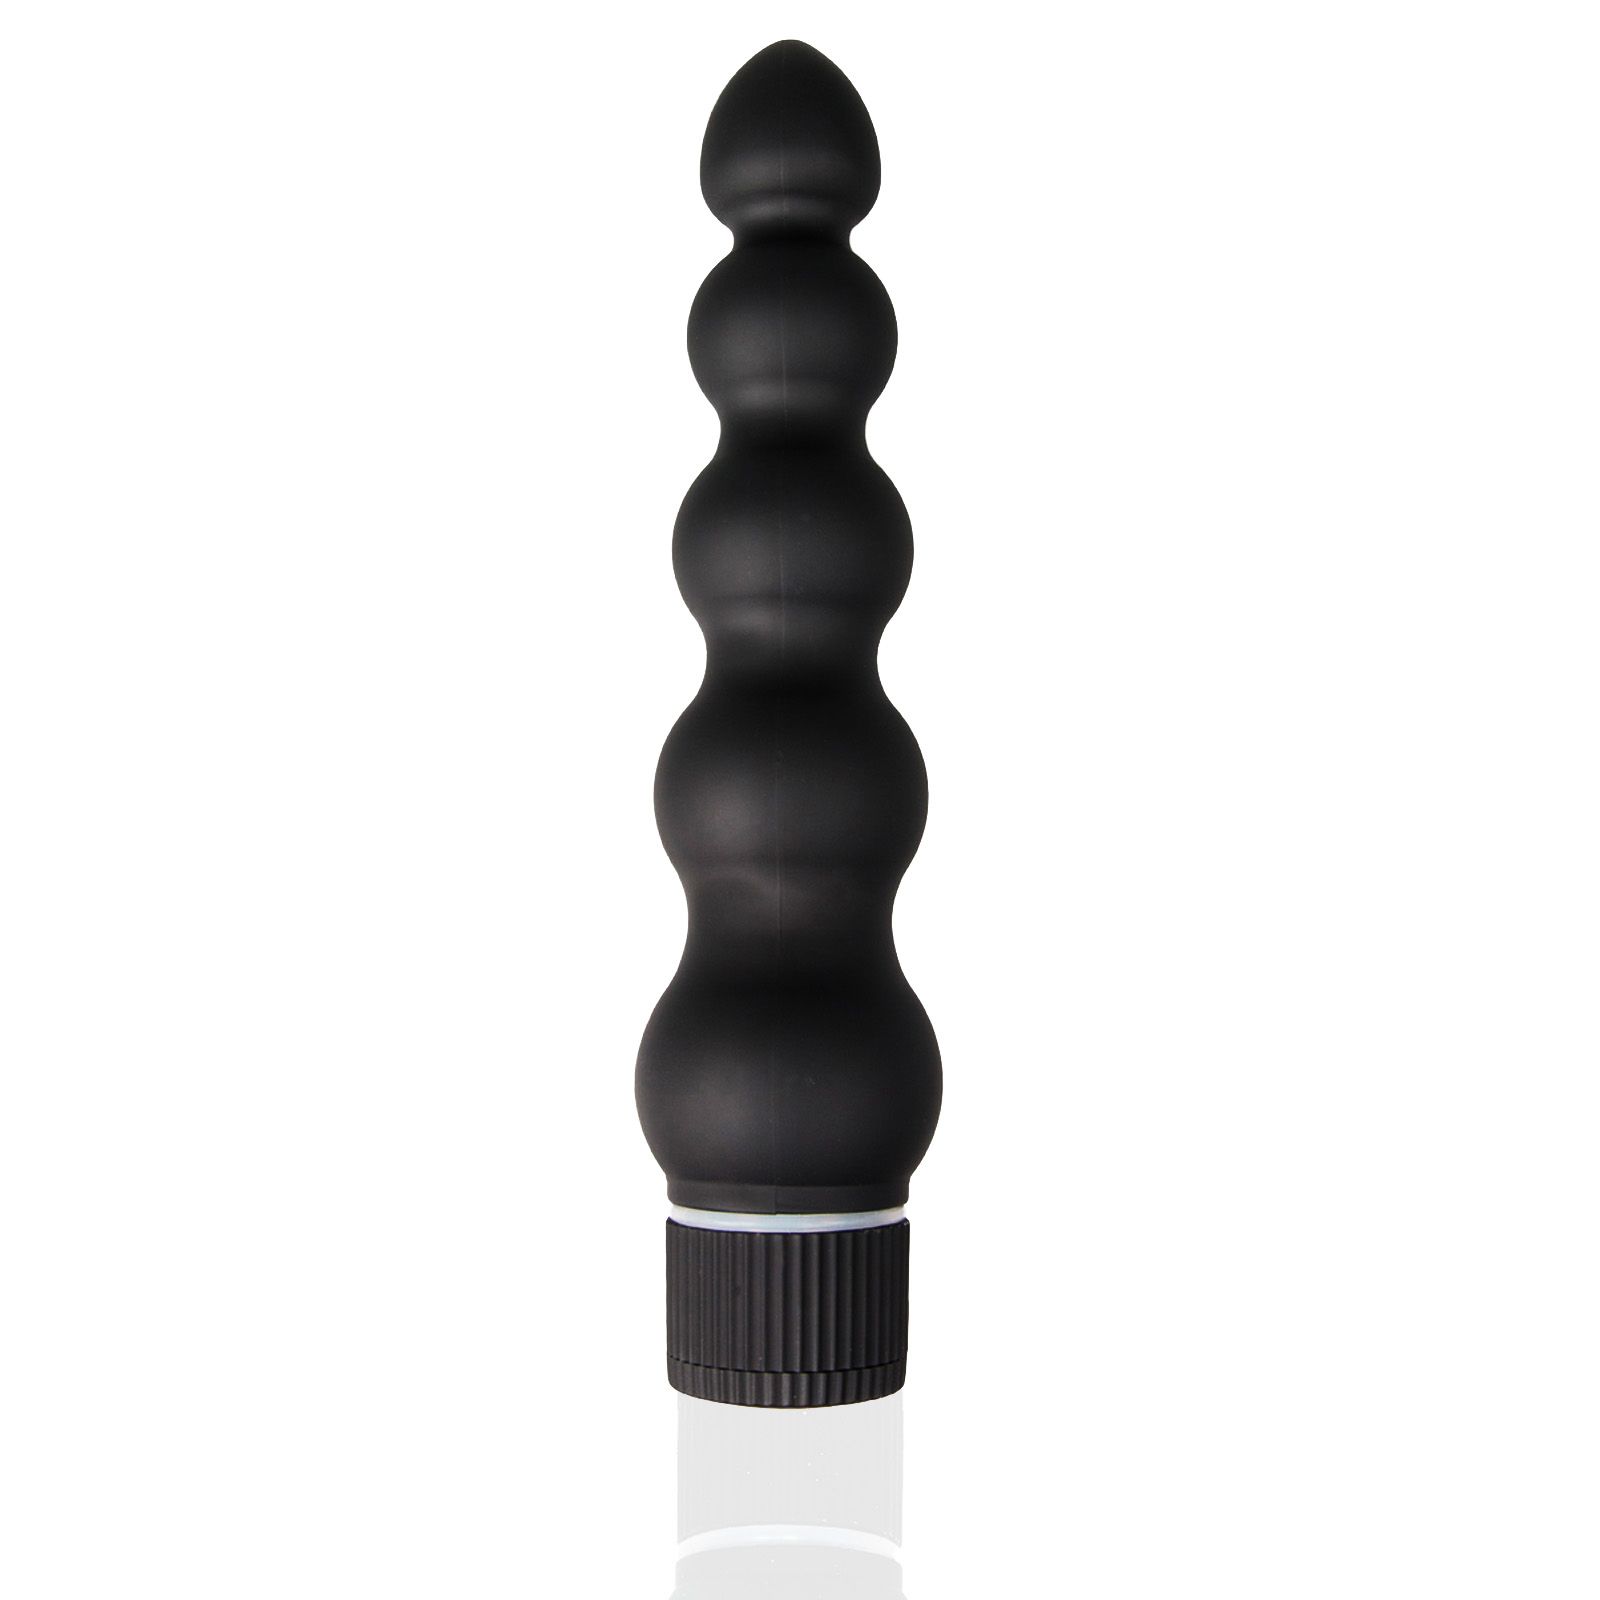 Easytoys - Kugel Vibrator in Schwarz aus Kunststoff